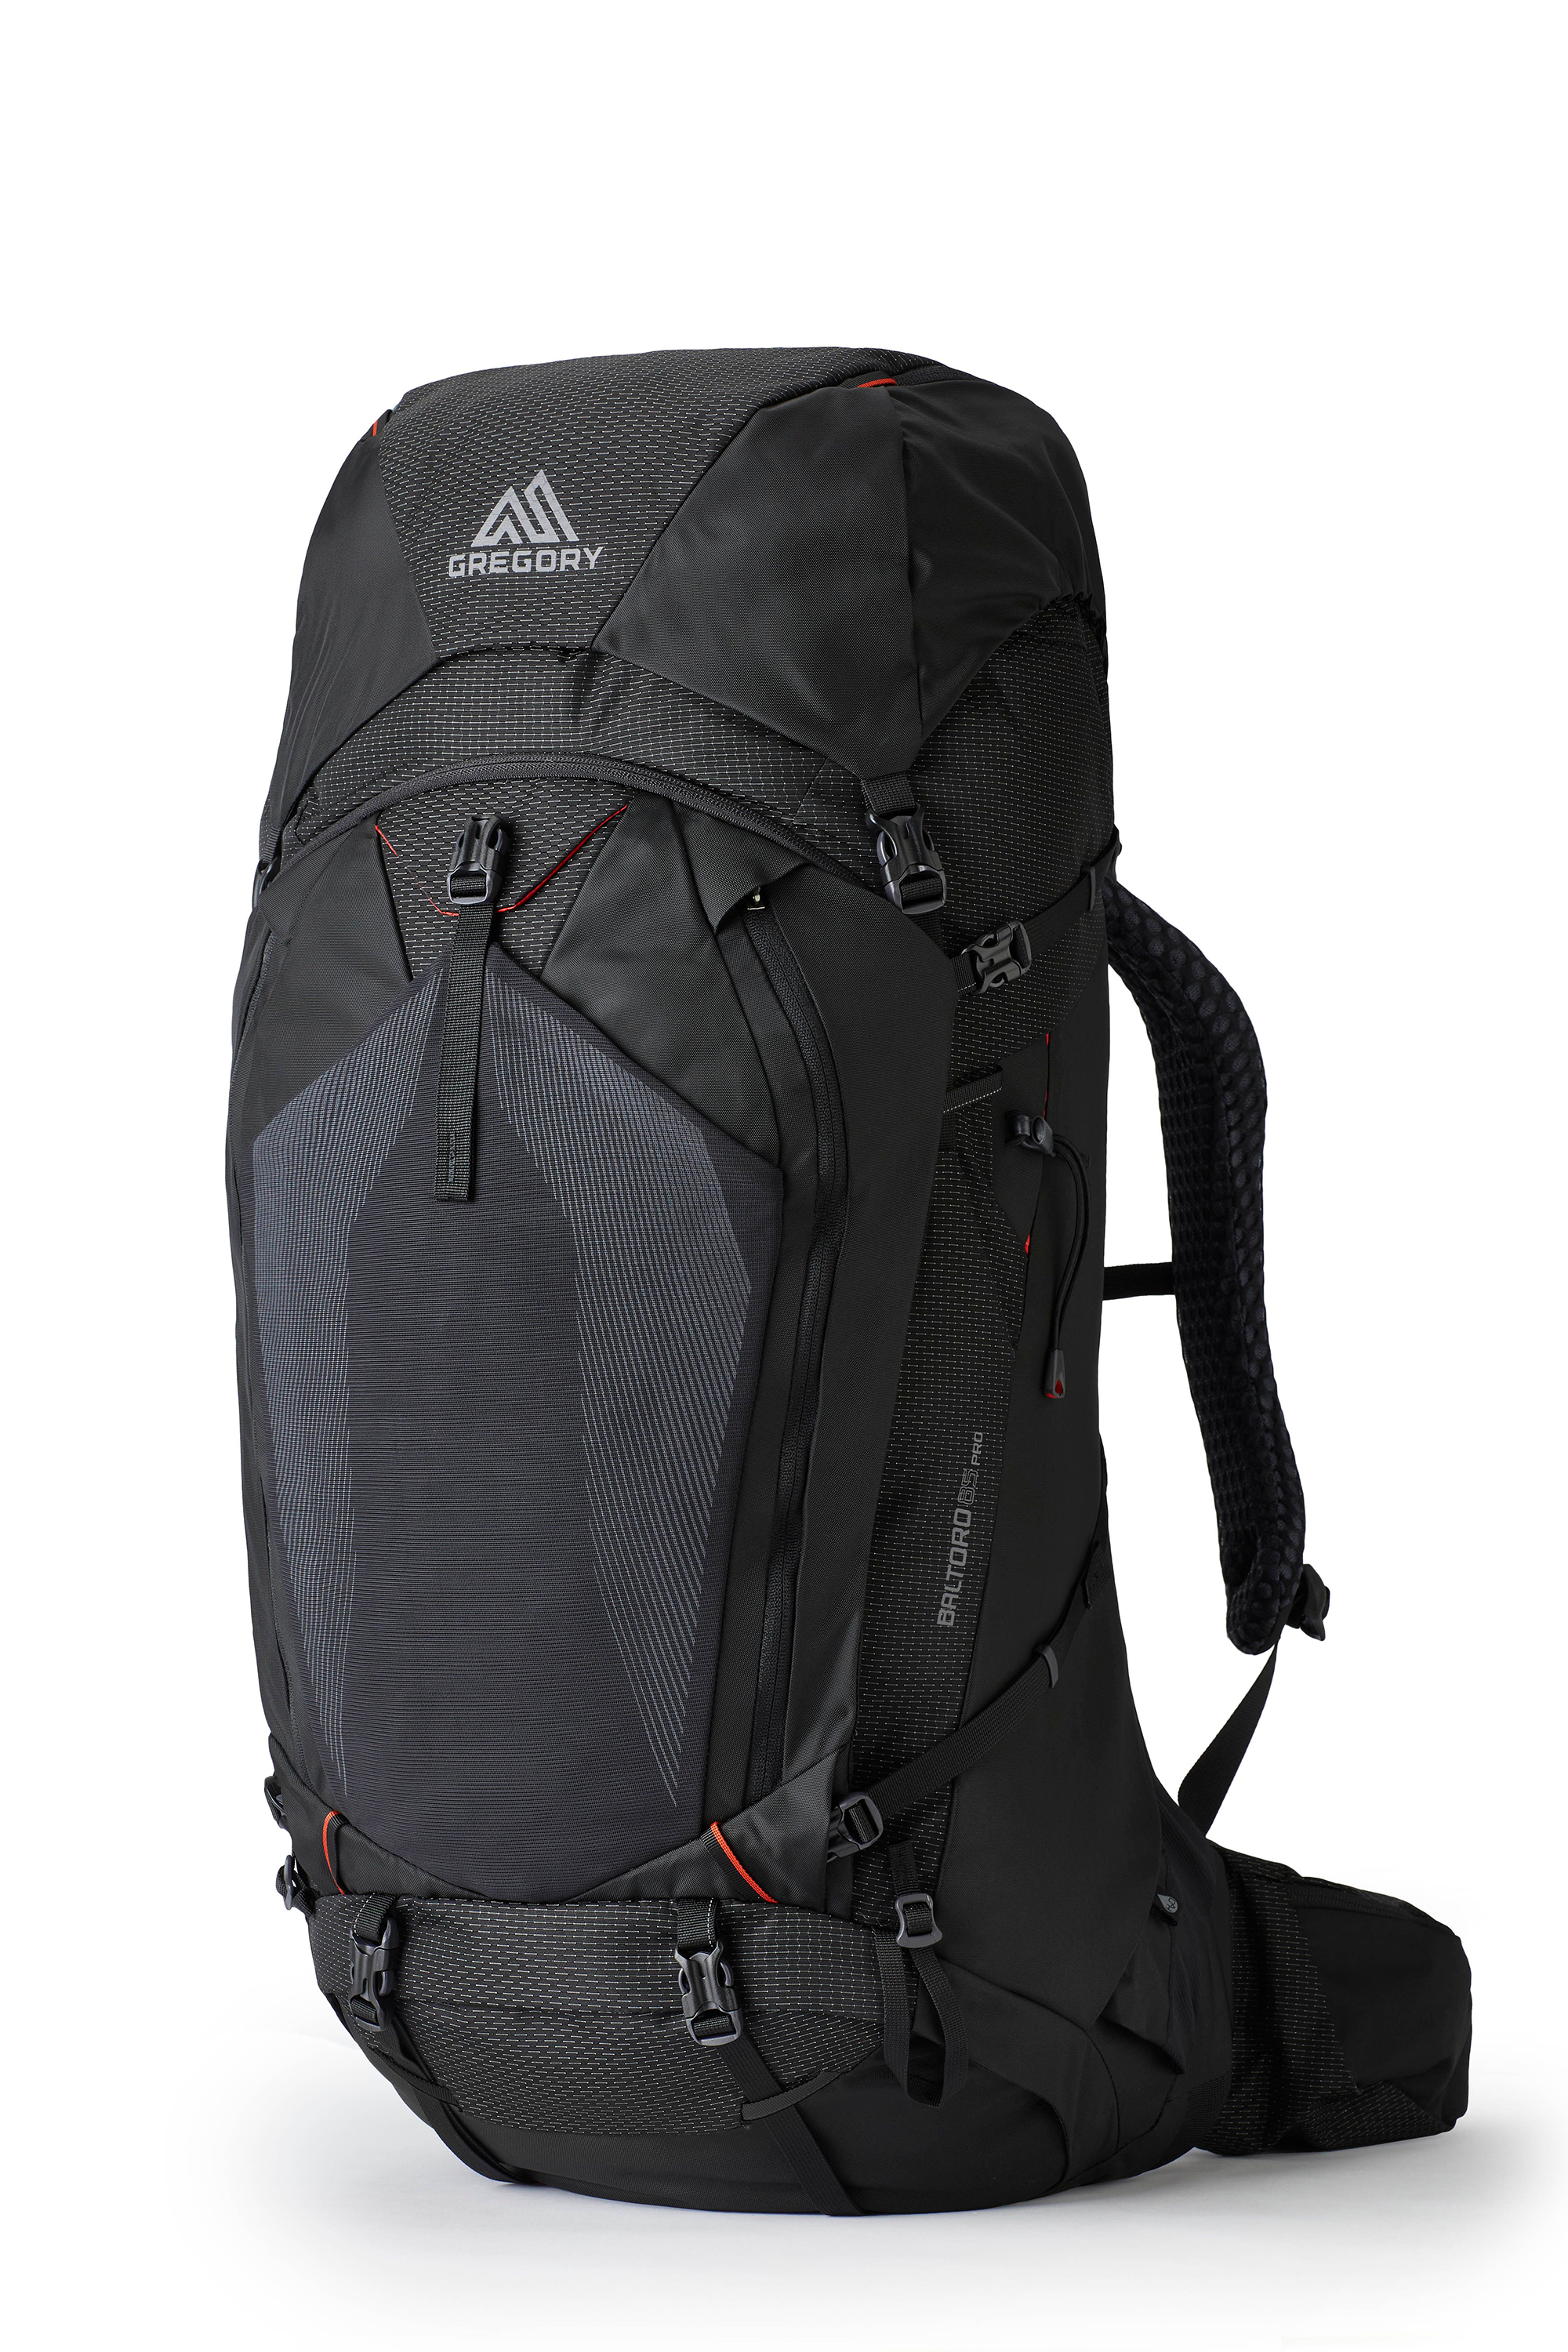 Gregory Baltoro 85 Pro Backpack - Lava Black - S